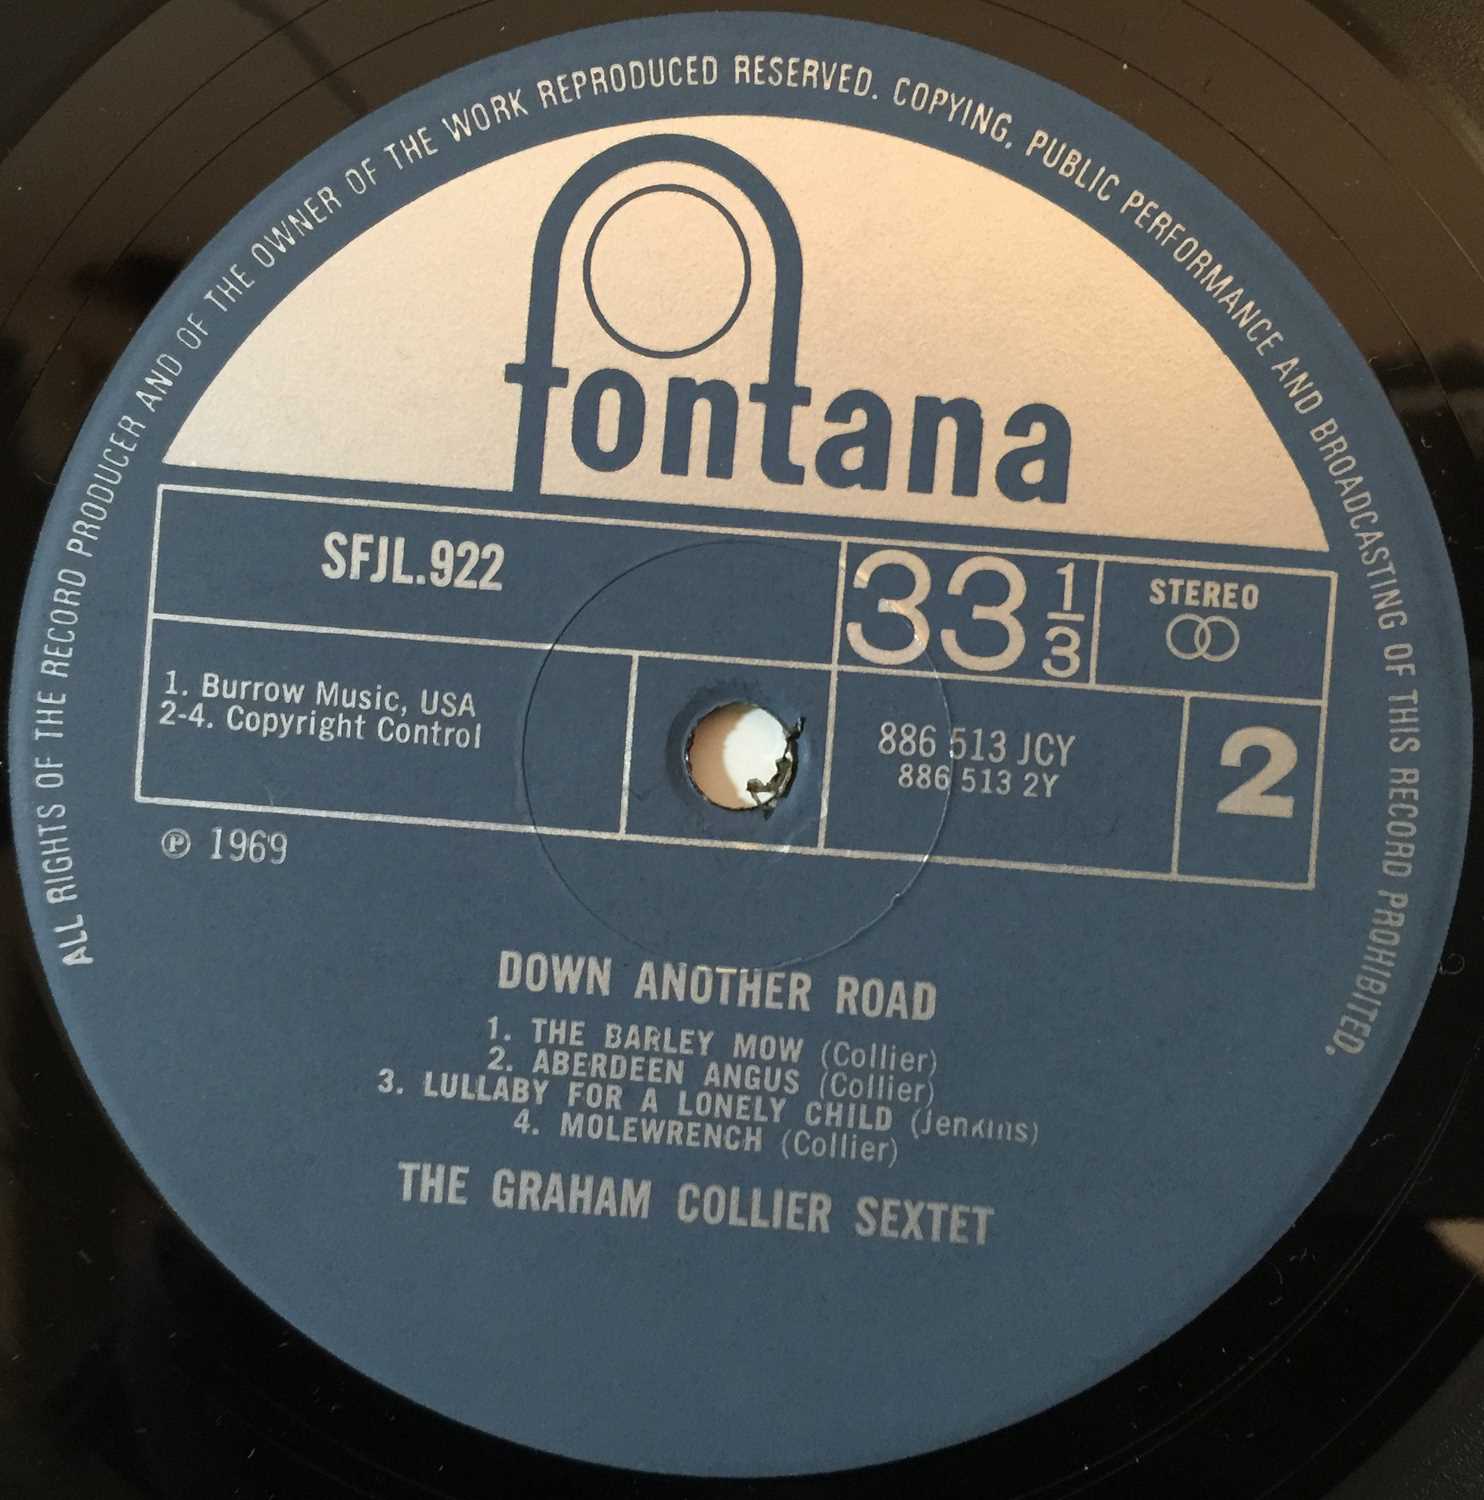 Graham Collier Sextet - Down Another Road LP (Original UK Release - Fontana SFJL 922) - Image 4 of 4